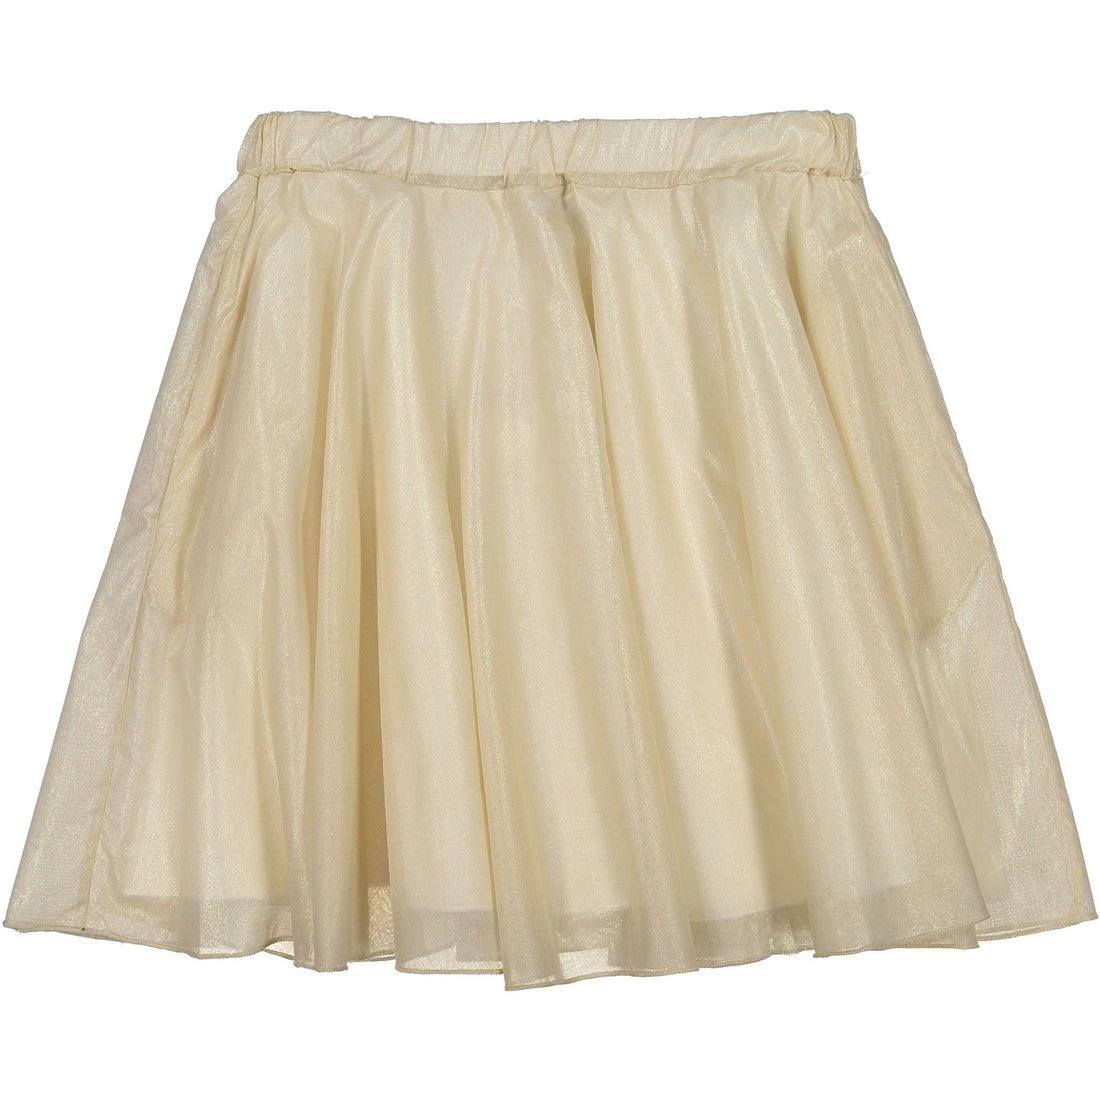 Orimusi Gold Flair Skirt